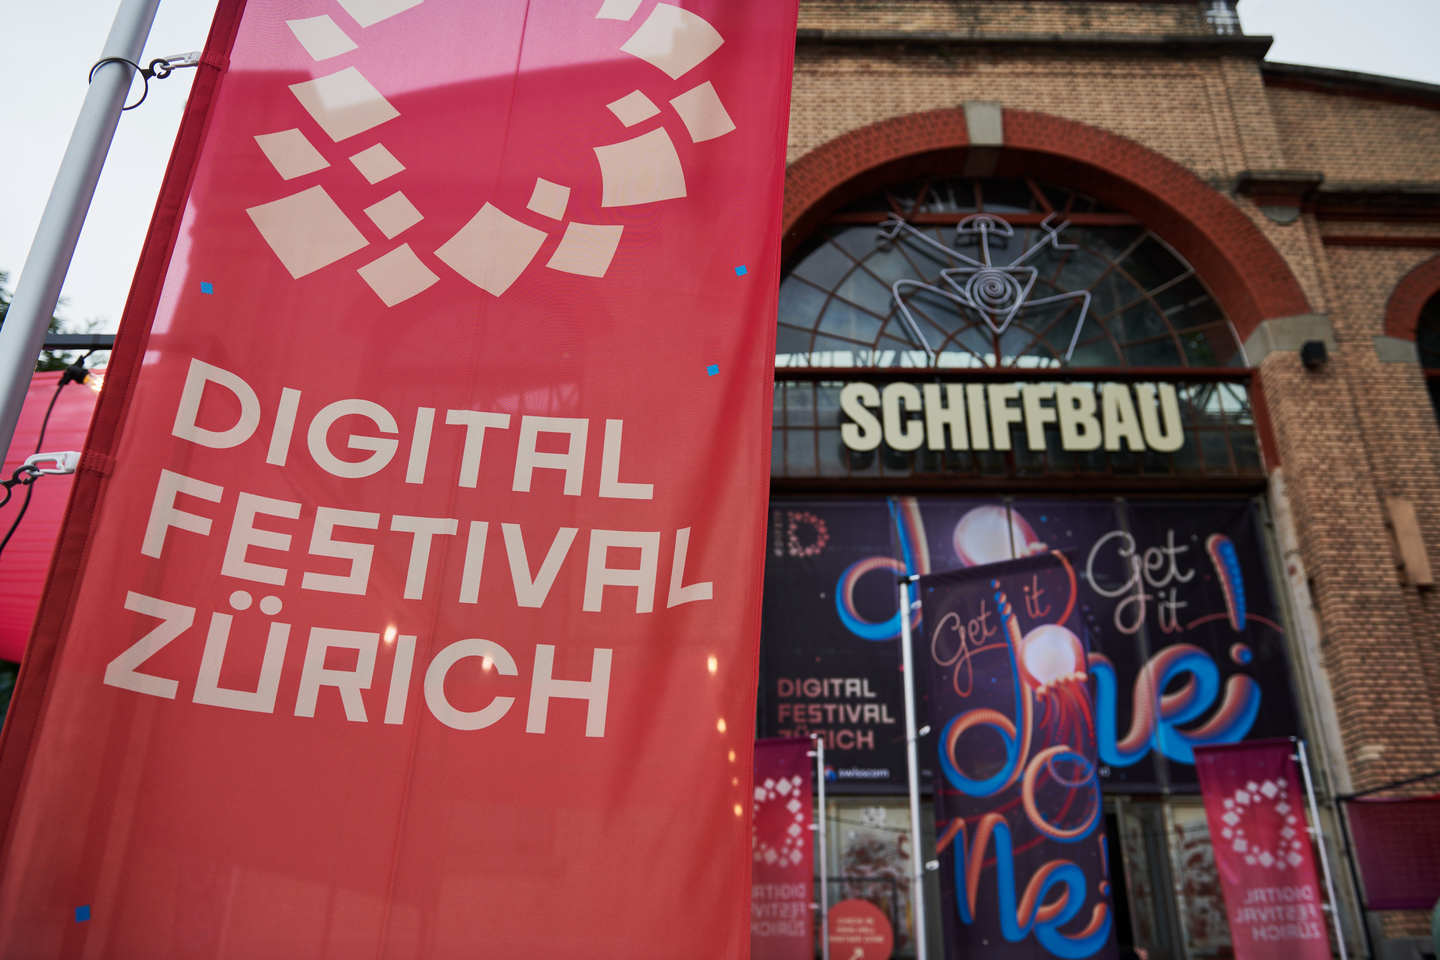 Digitale Gesellschaft am Digital Festival